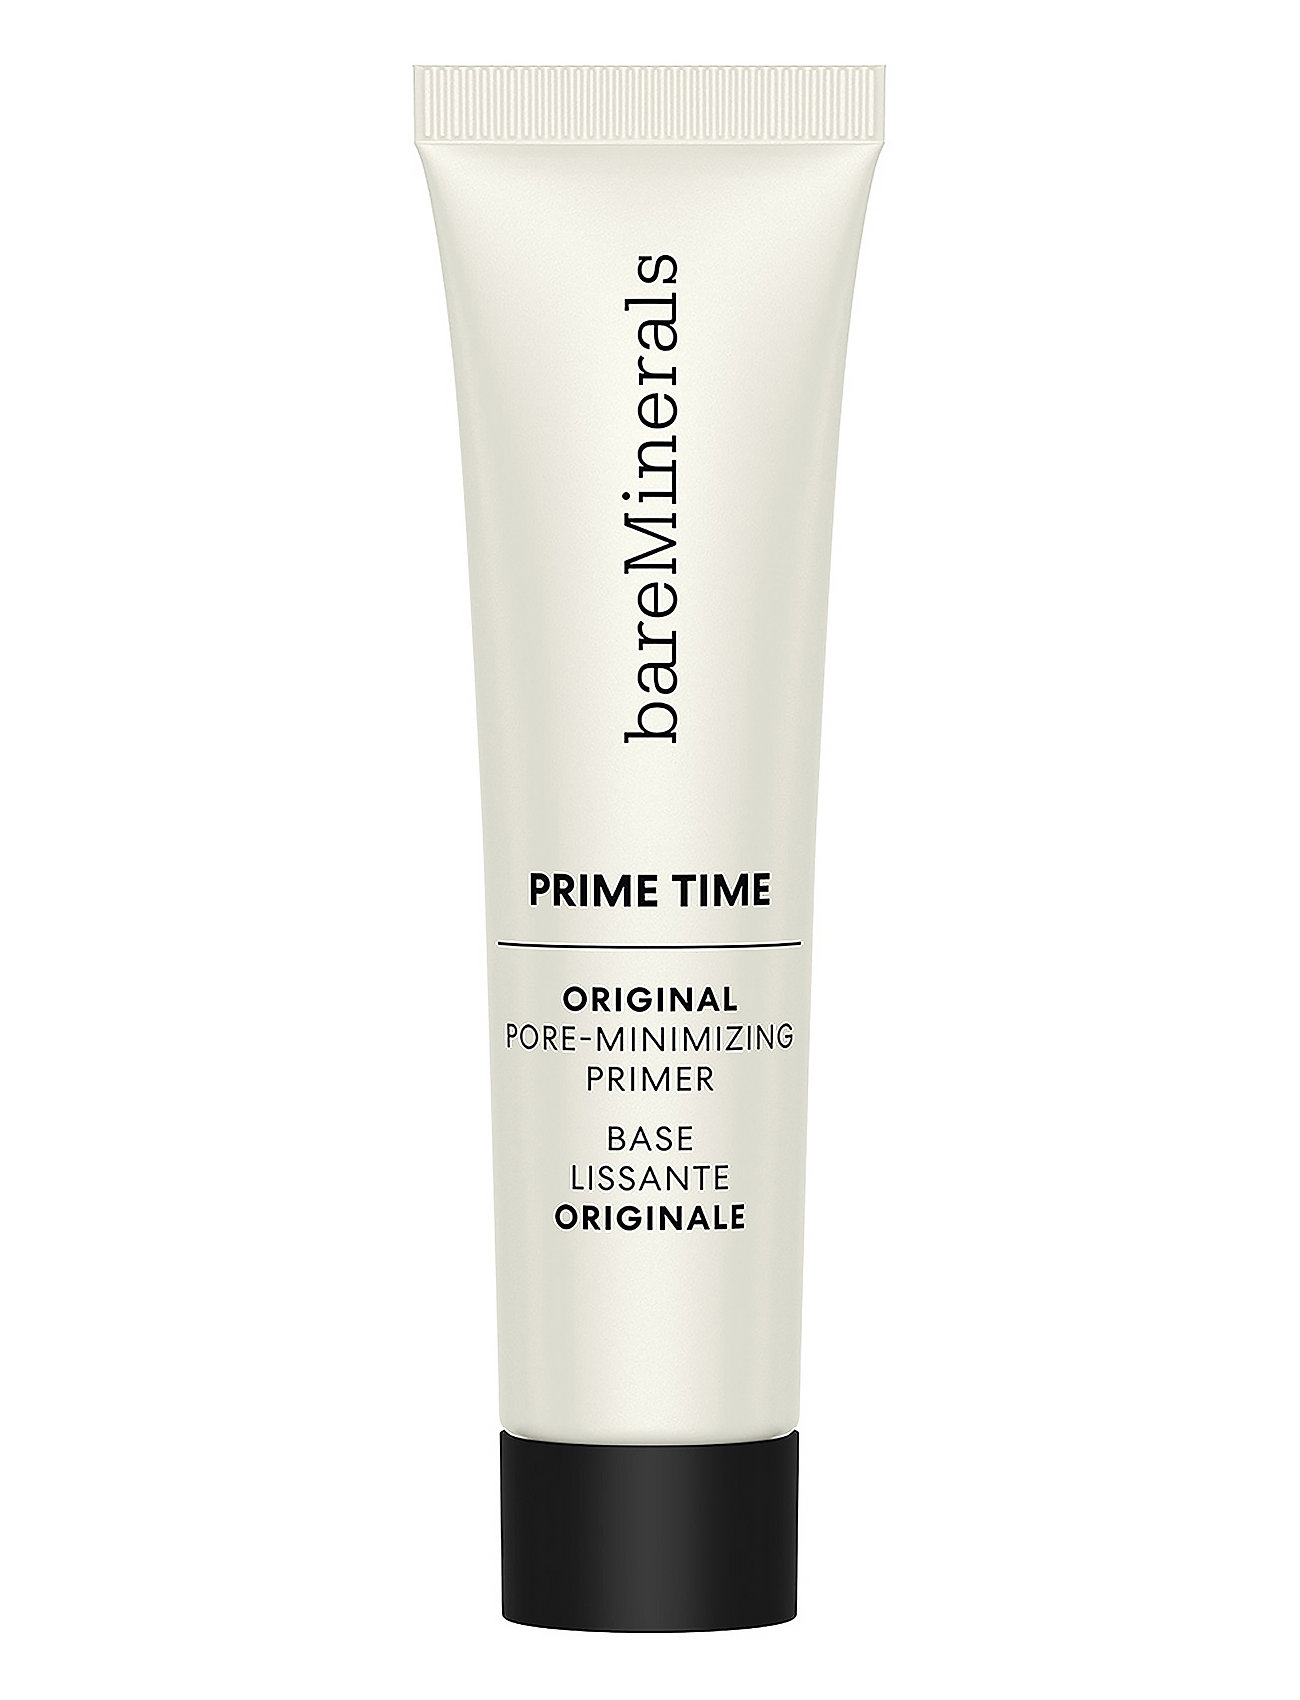 Prime Time Prime Time Pore-Minimizing Makeup Primer Smink Nude BareMinerals